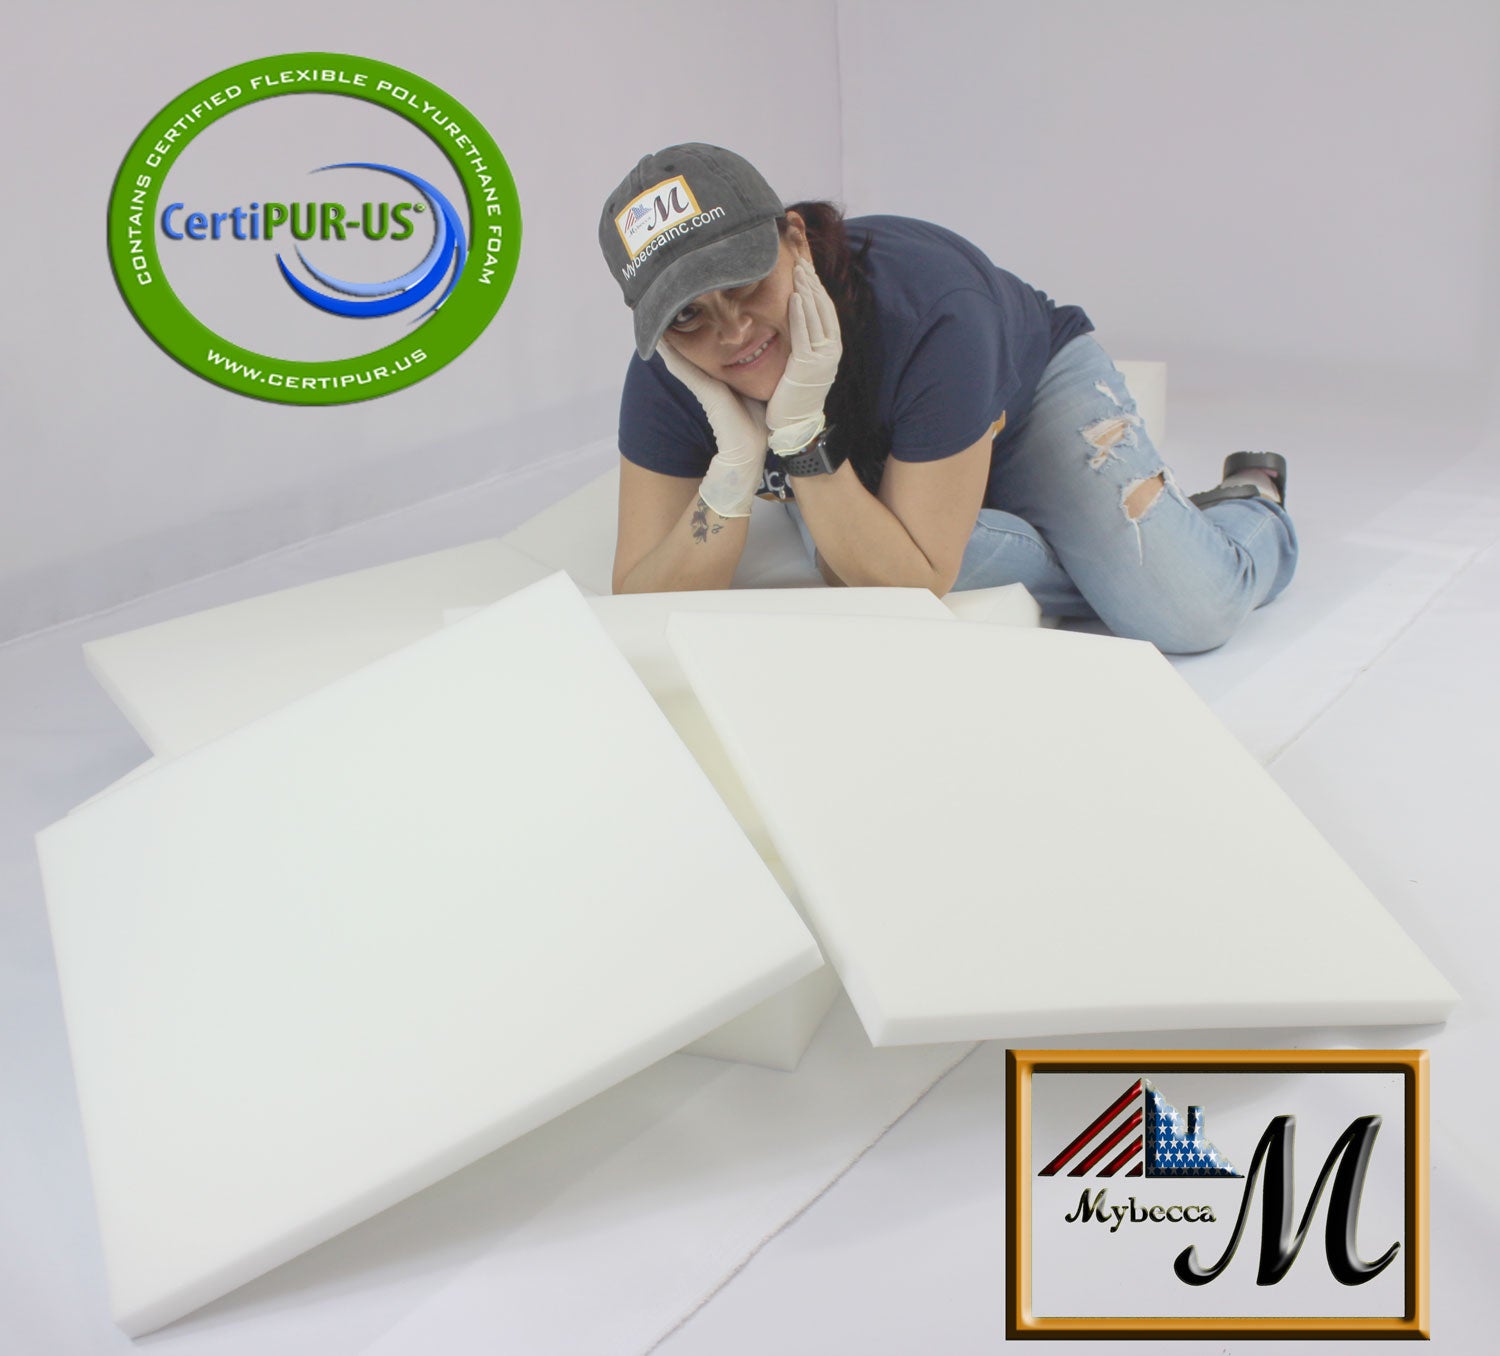 4 X 30 X 72 Upholstery Foam Cushion High Density (Seat